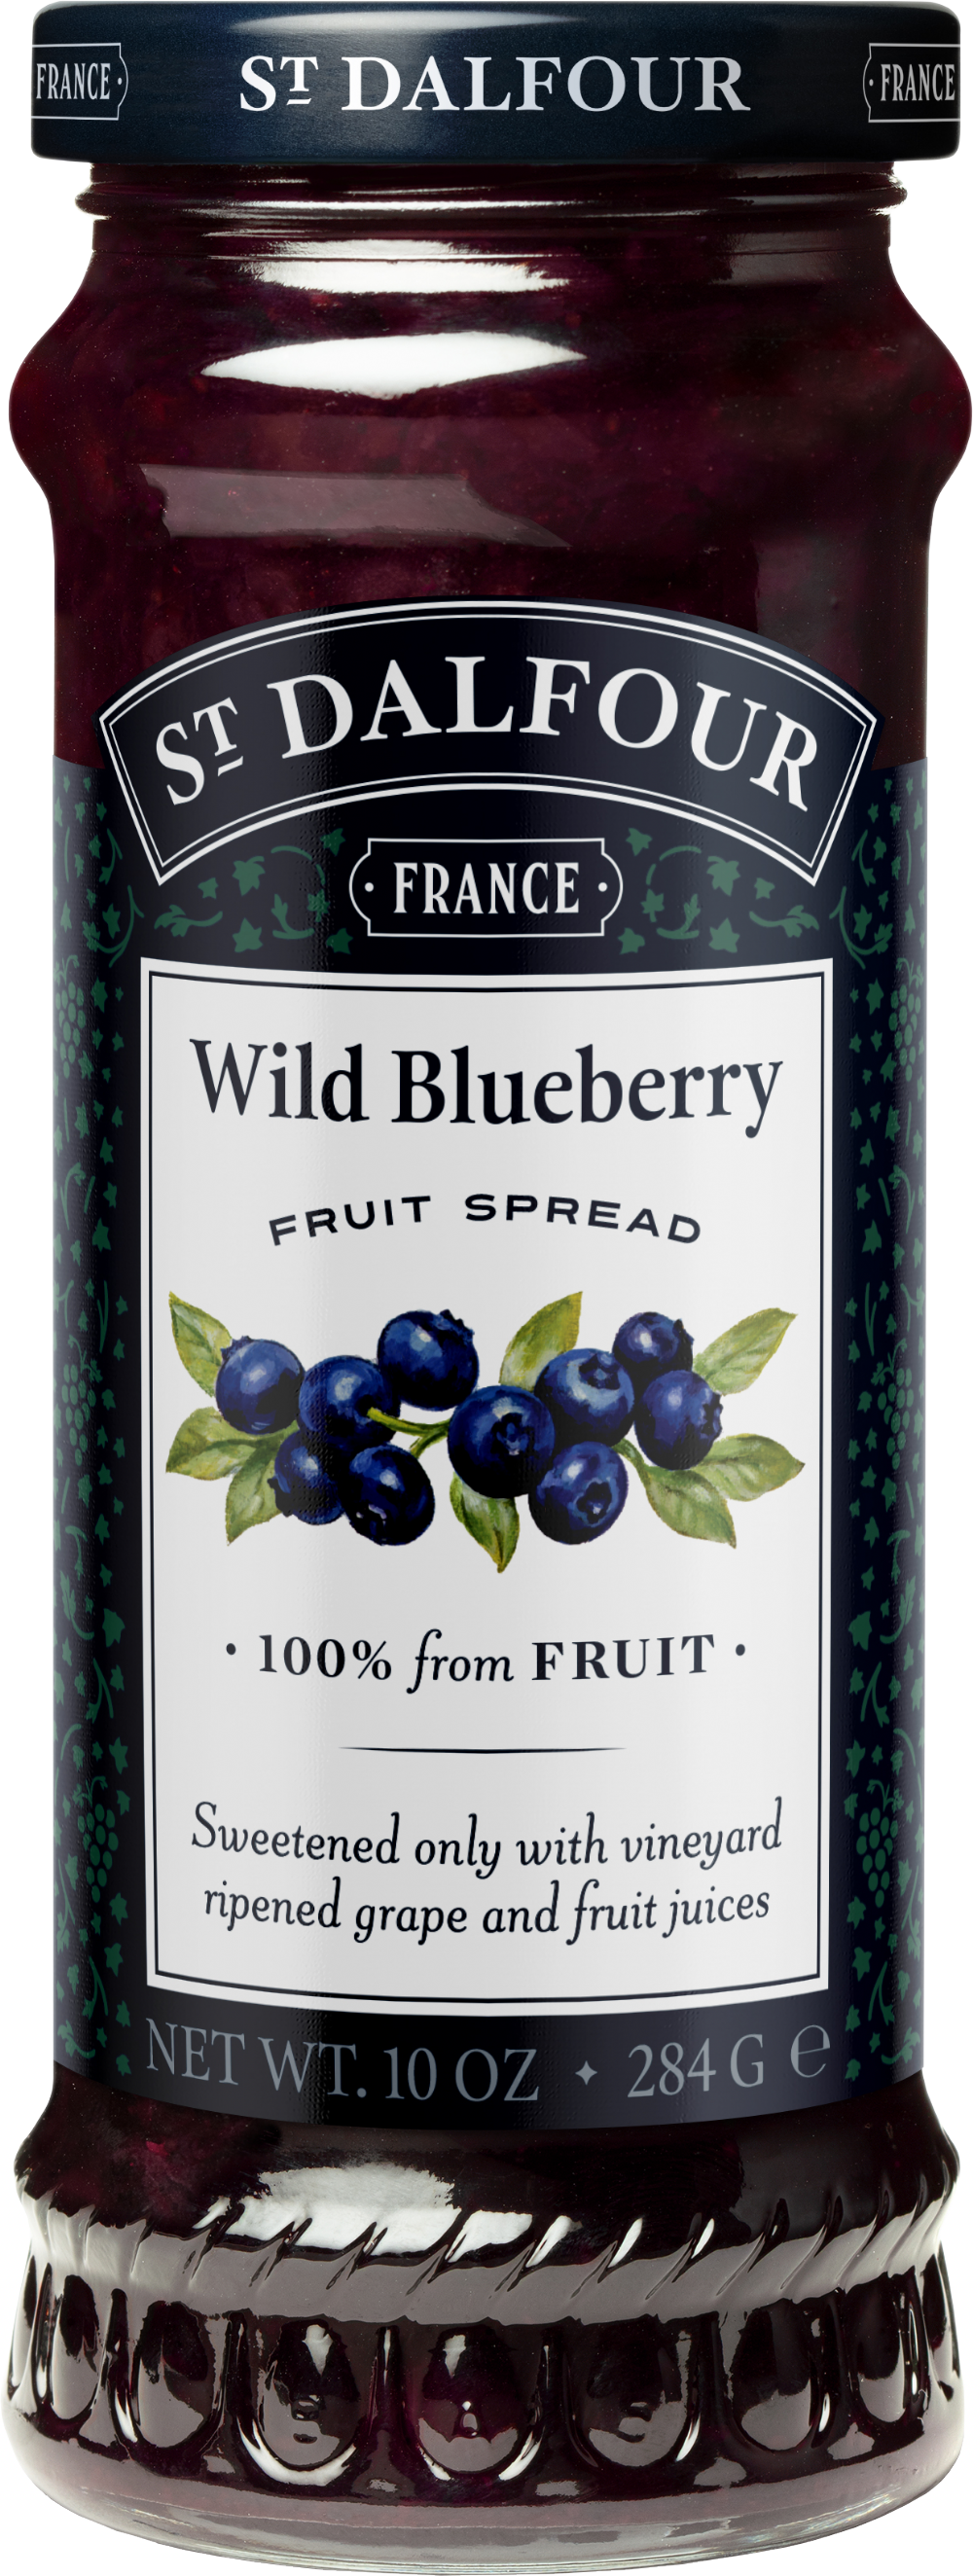 ST DALFOUR Wild Blueberry Fruit Spread 284g